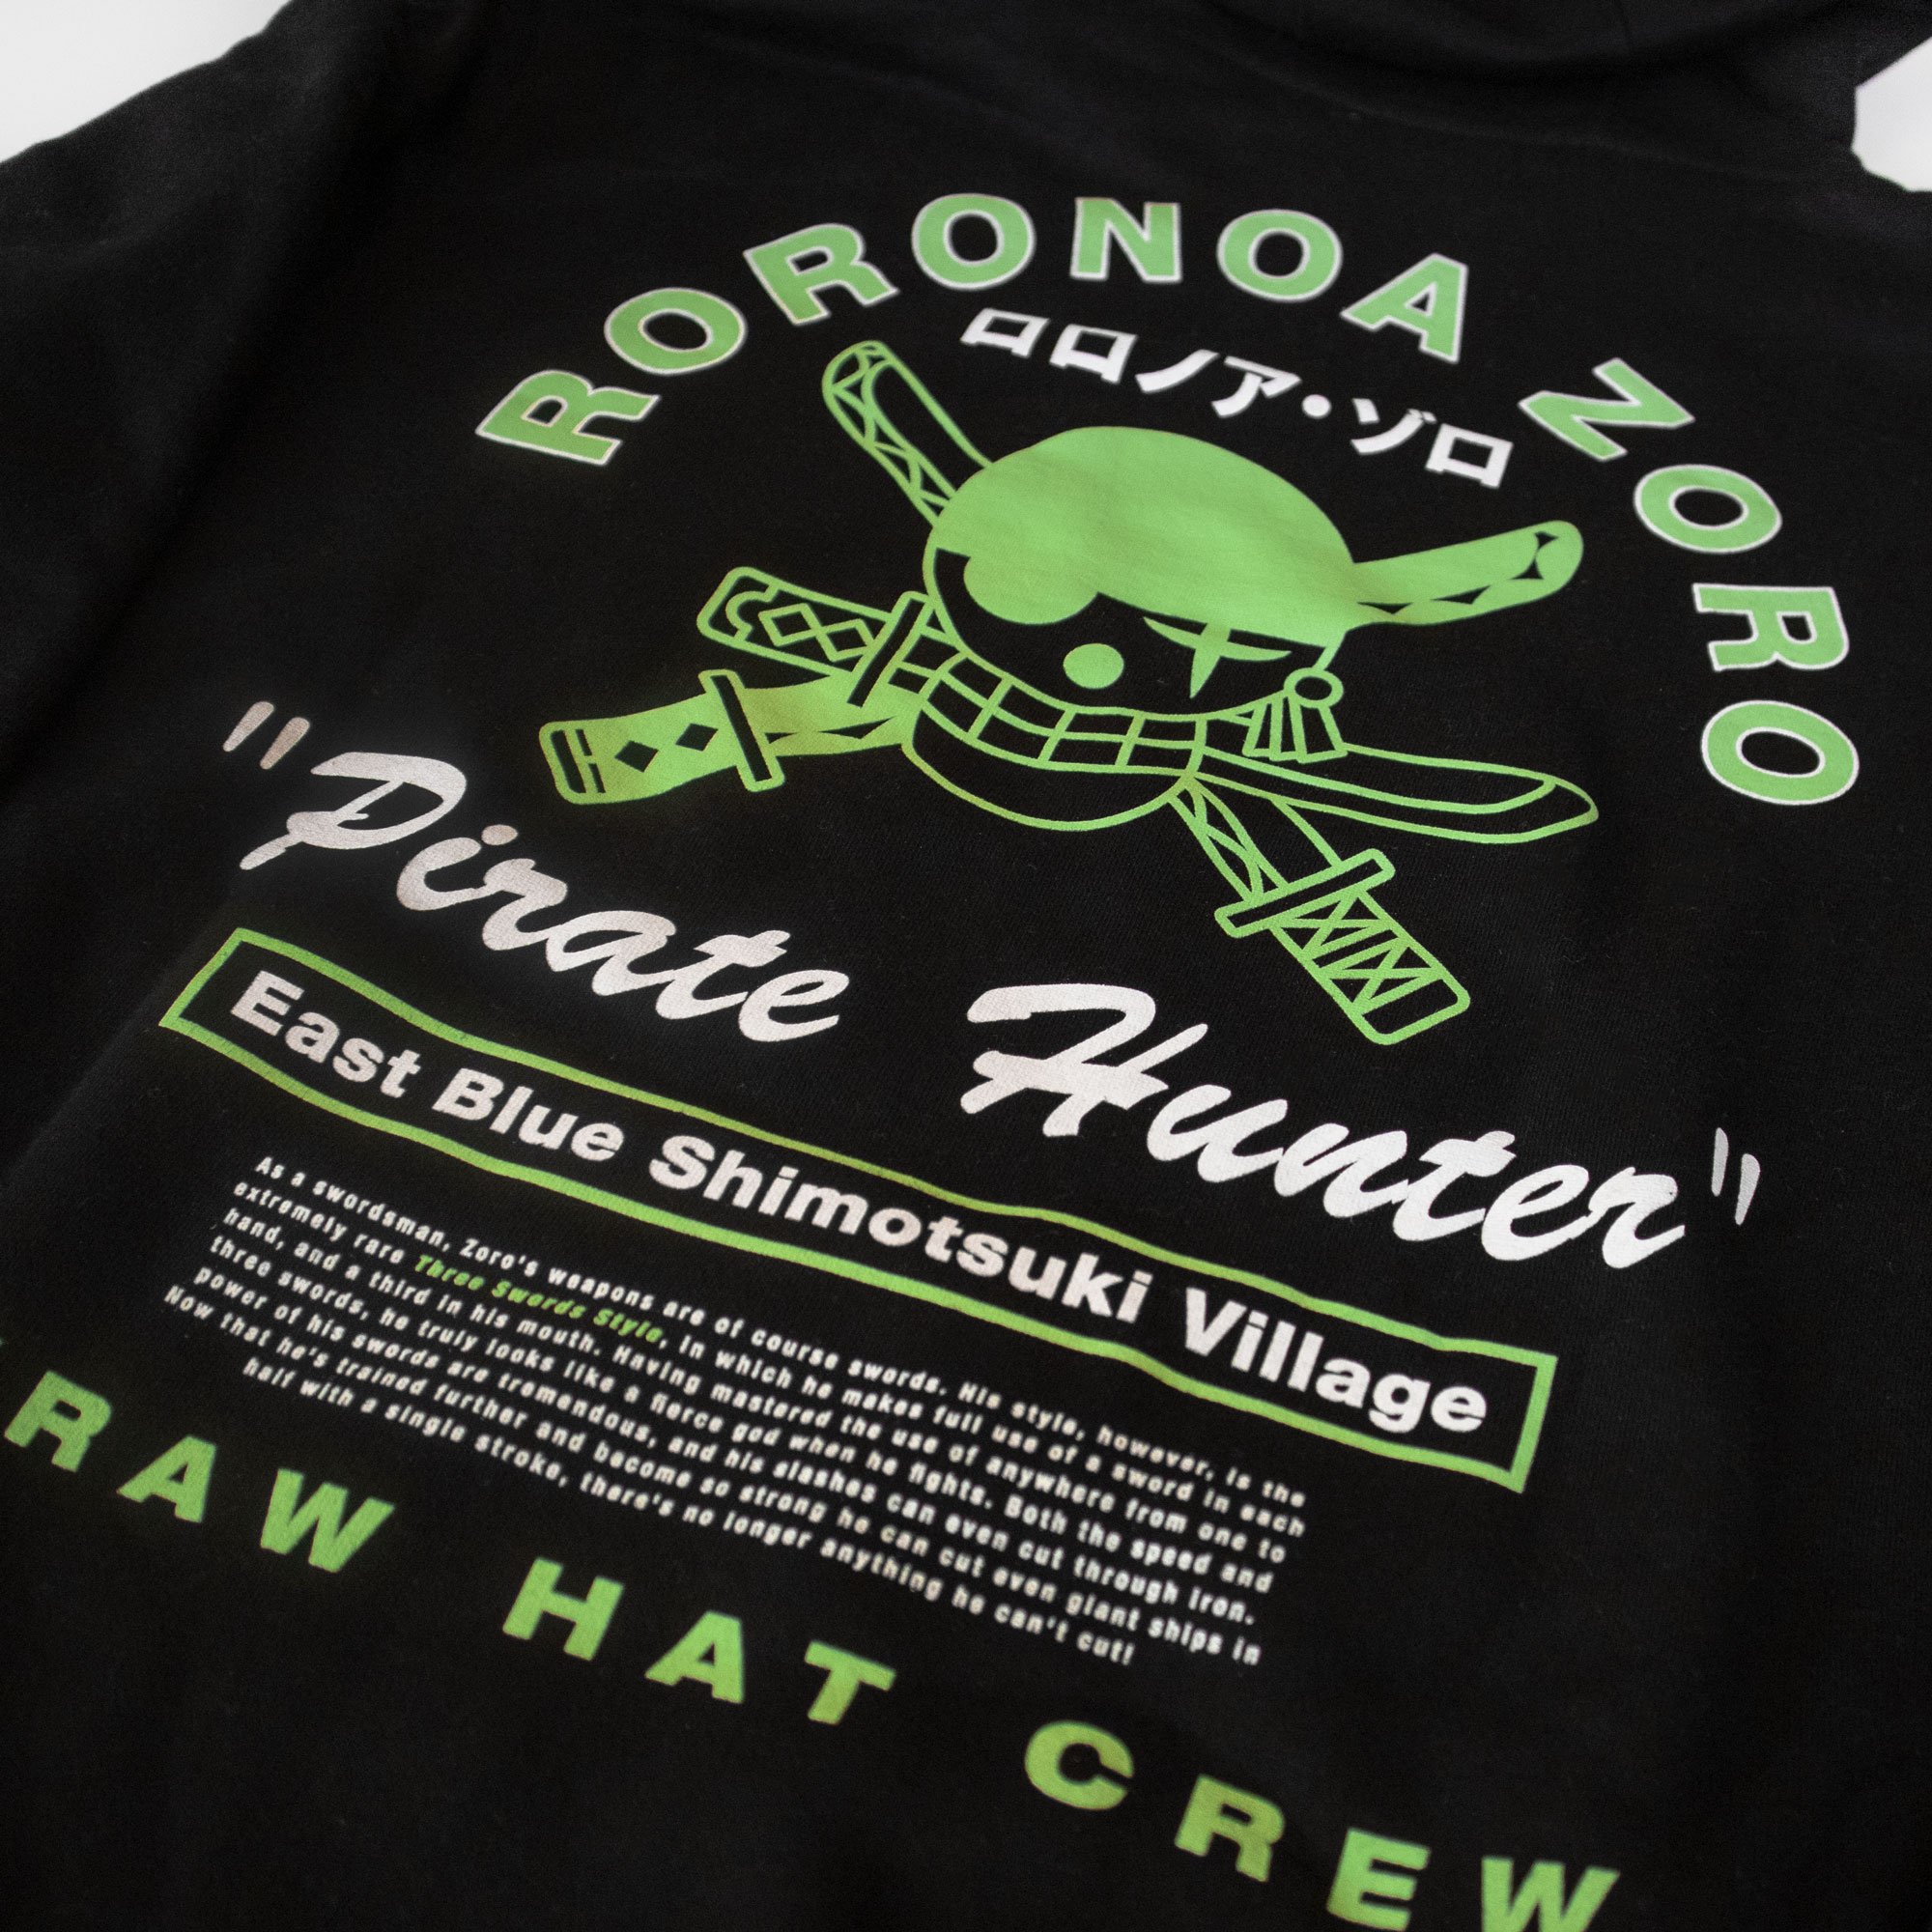 One Piece - Roronoa Zoro Pirate Hunter Hoodie - Crunchyroll Exclusive! image count 3